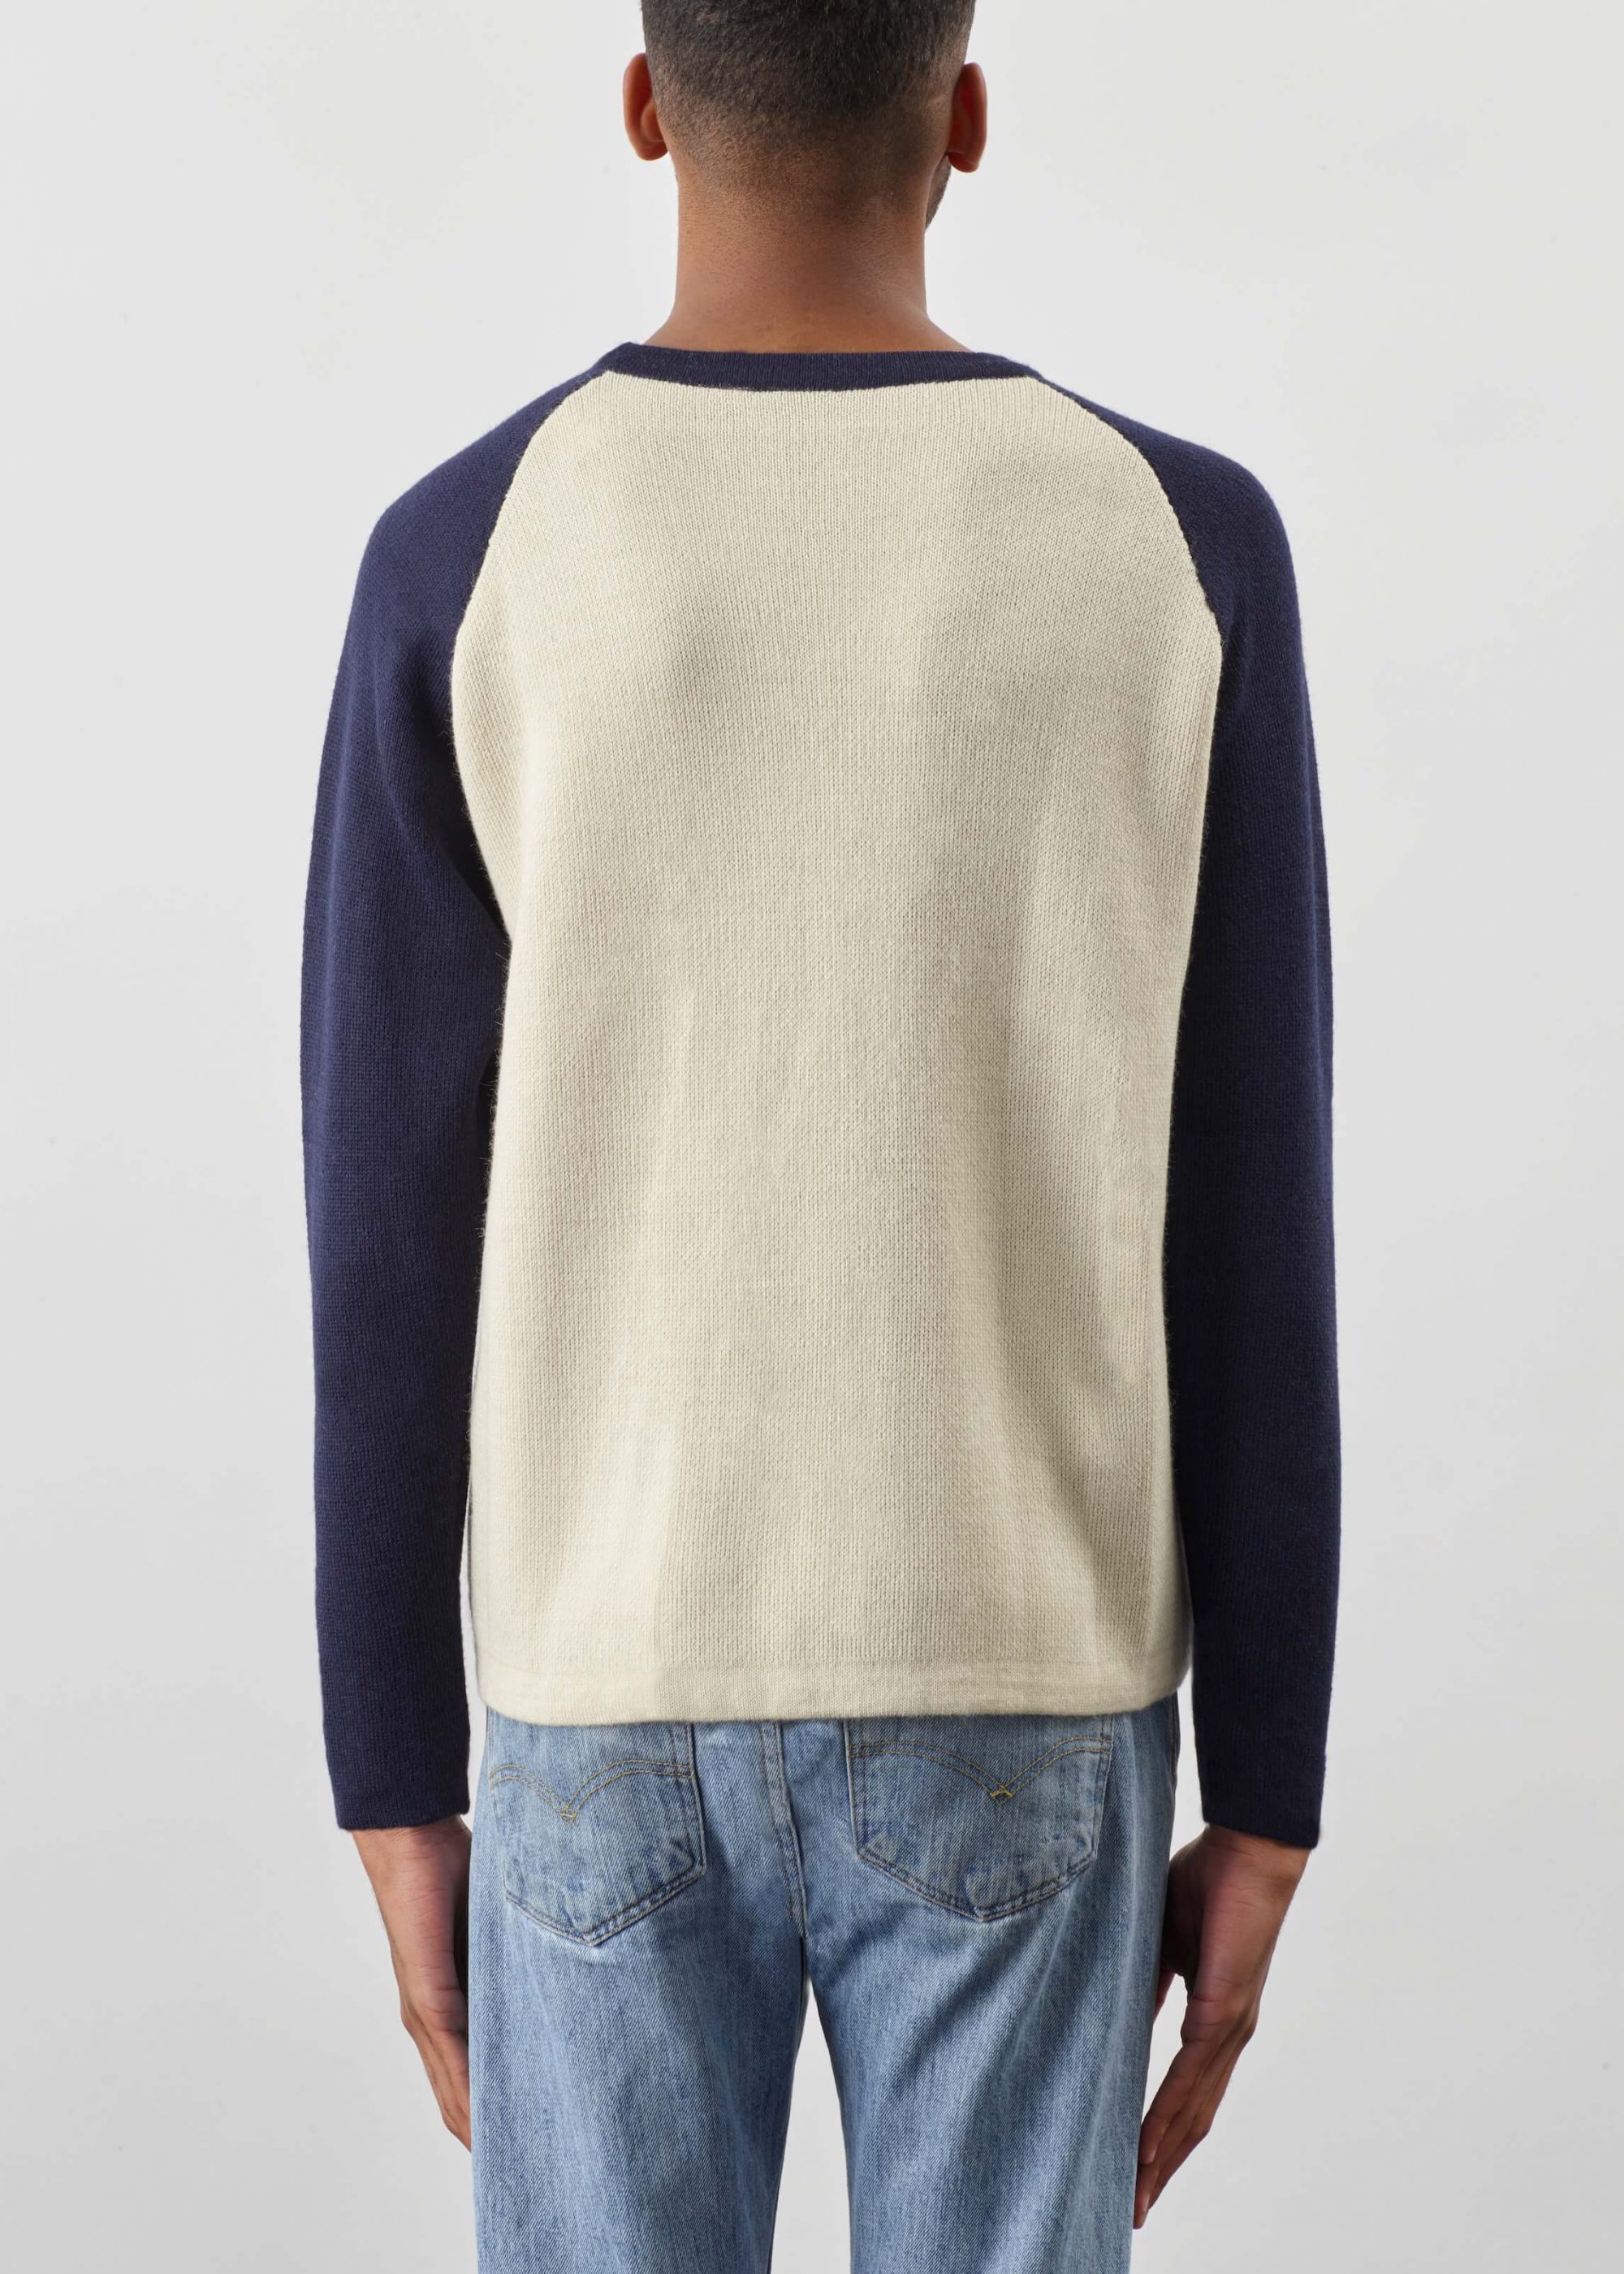 Product image for »Baseball Navy« Raglan Sweater Baby Alpaca | Navy Ecru